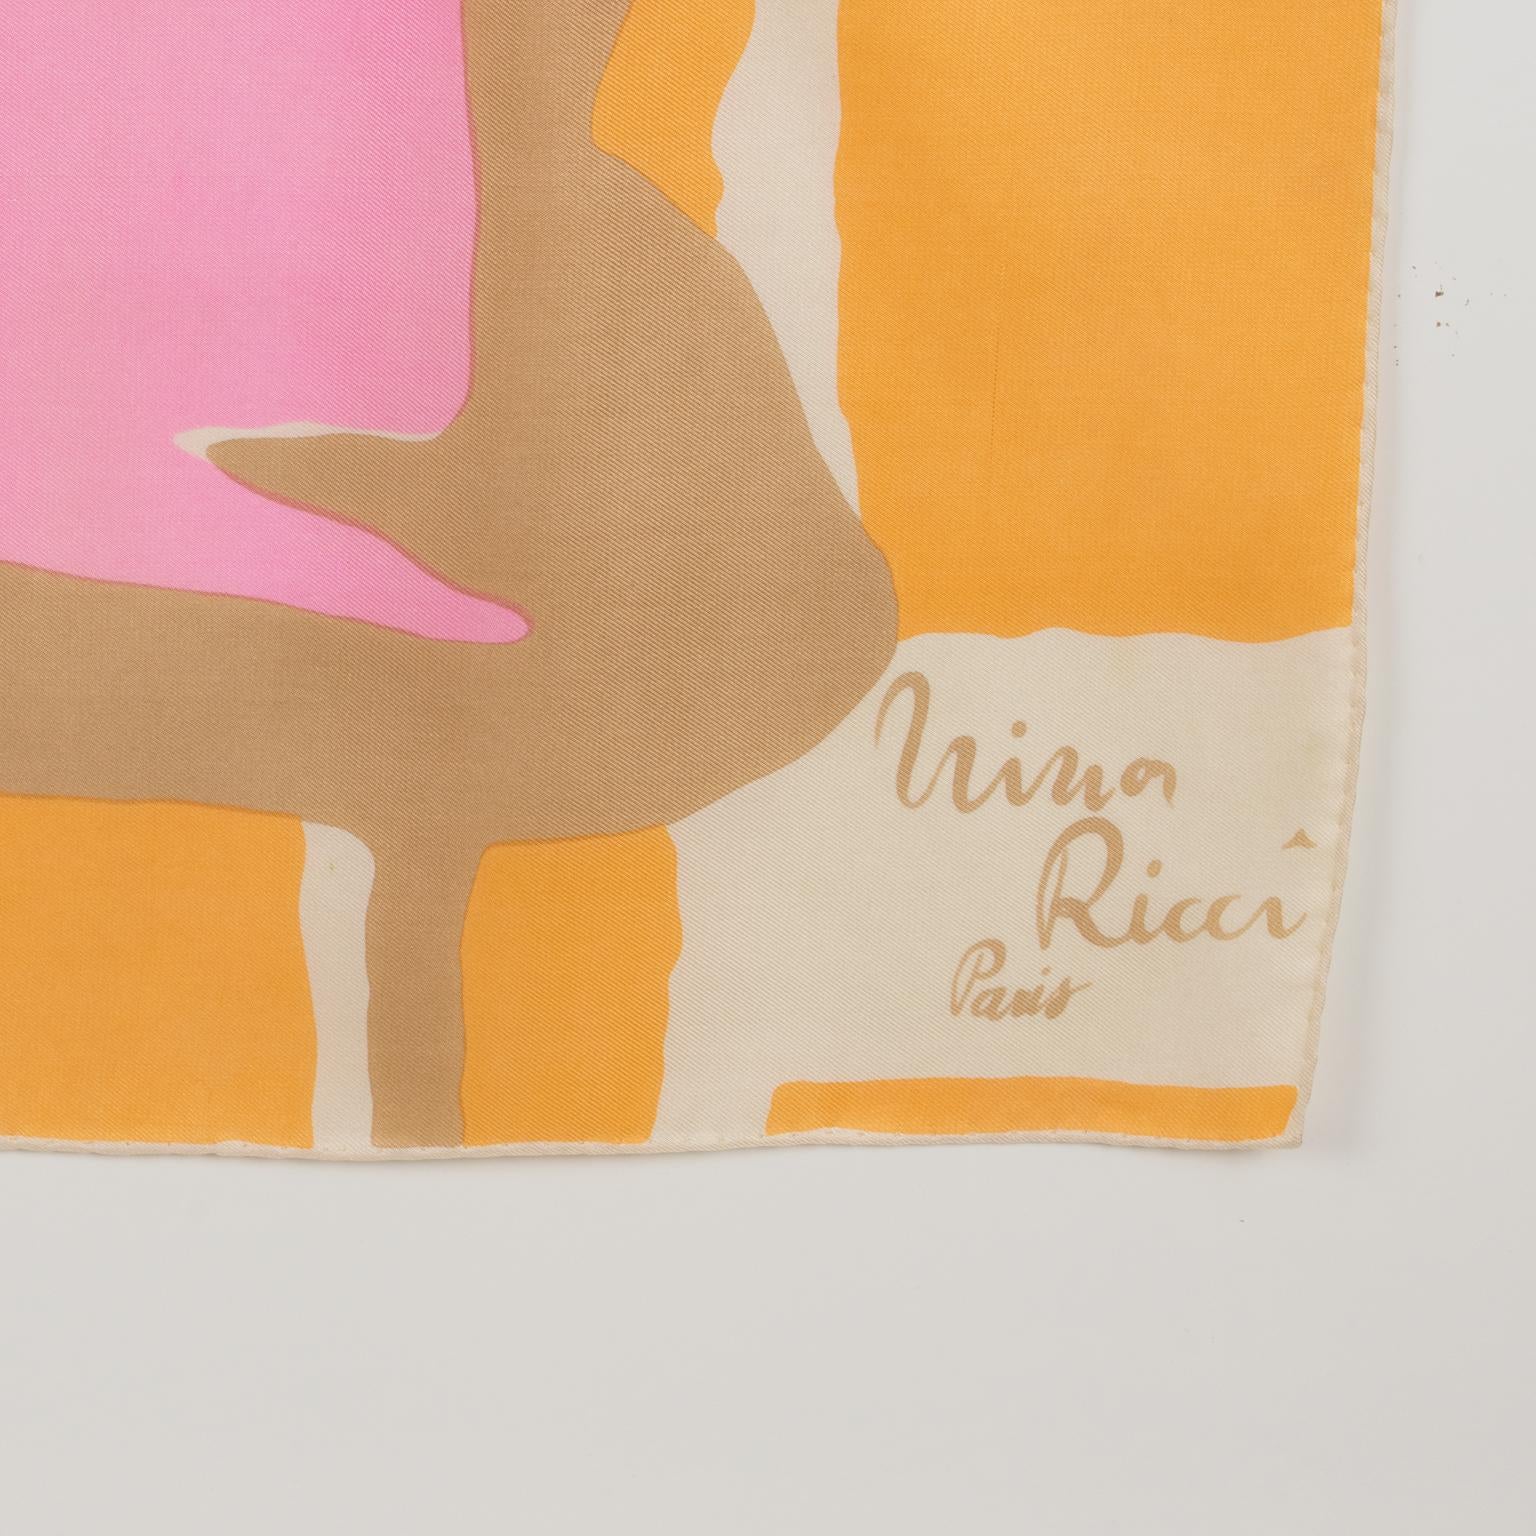 Nina Ricci Paris Silk Scarf Abstract 1970s Print in Pink and Orange 1